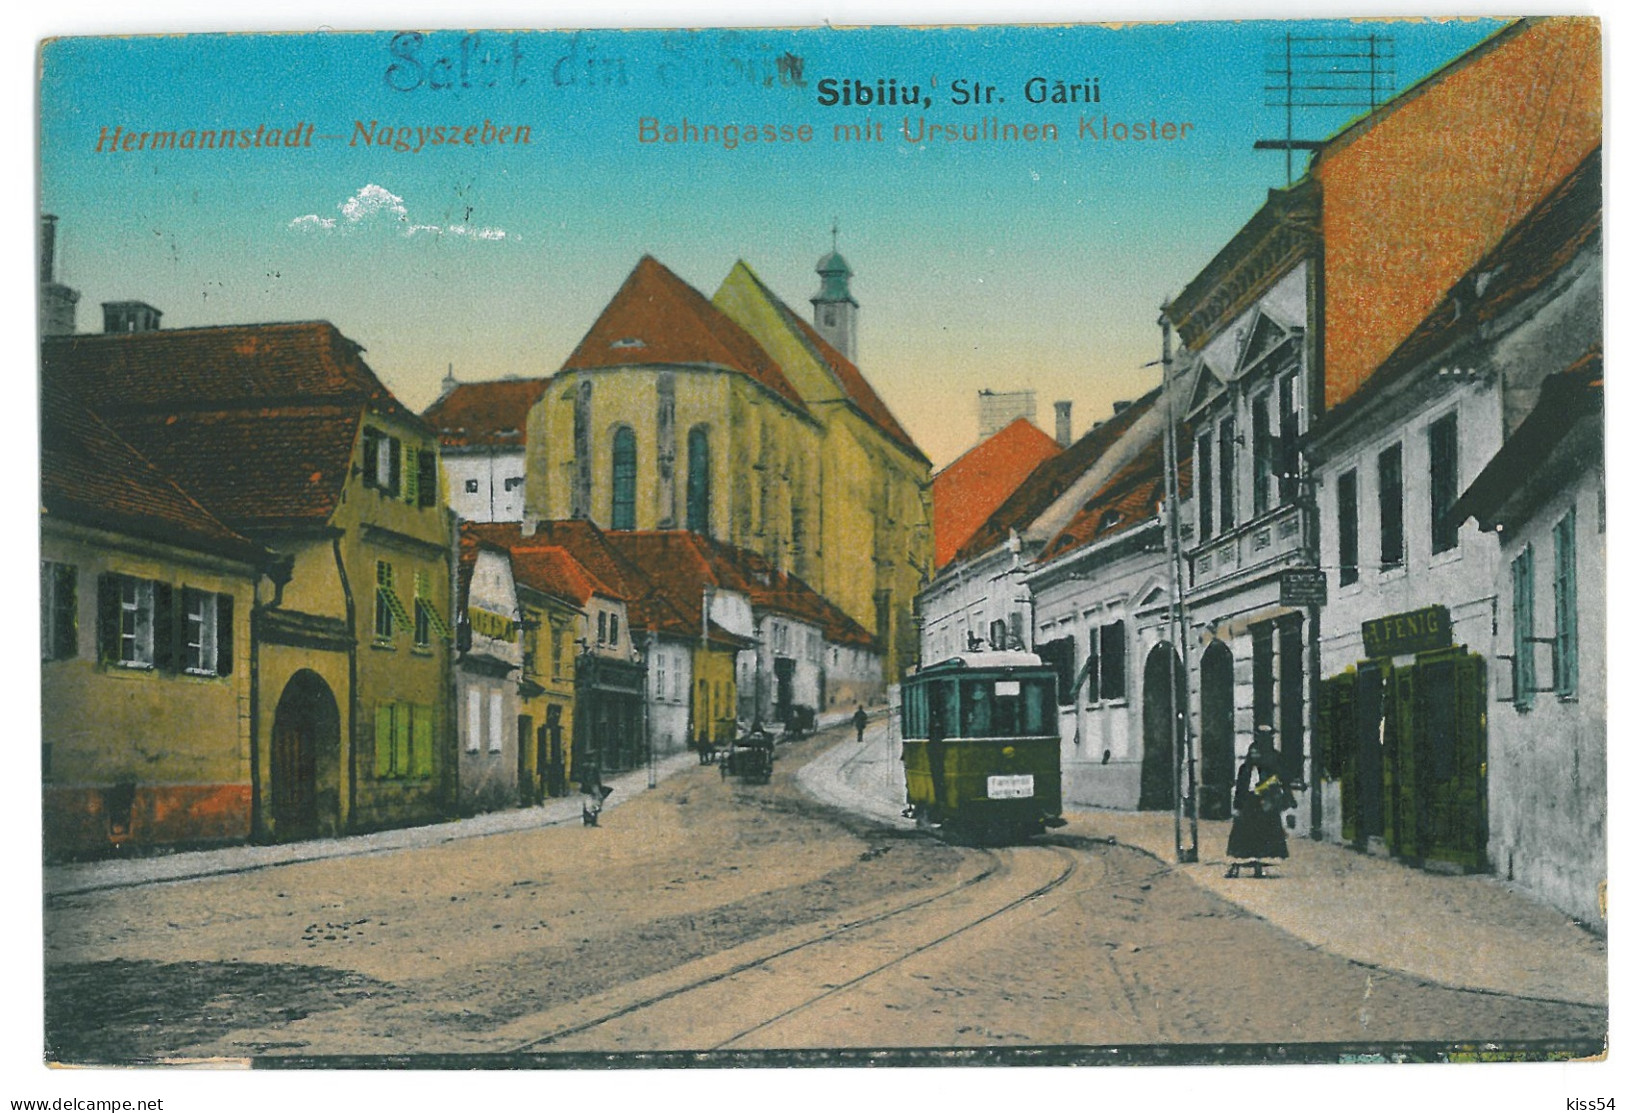 RO 09 - 22407 SIBIU, Tramway, Romania - Old Postcard - Used - 1926 - Roemenië